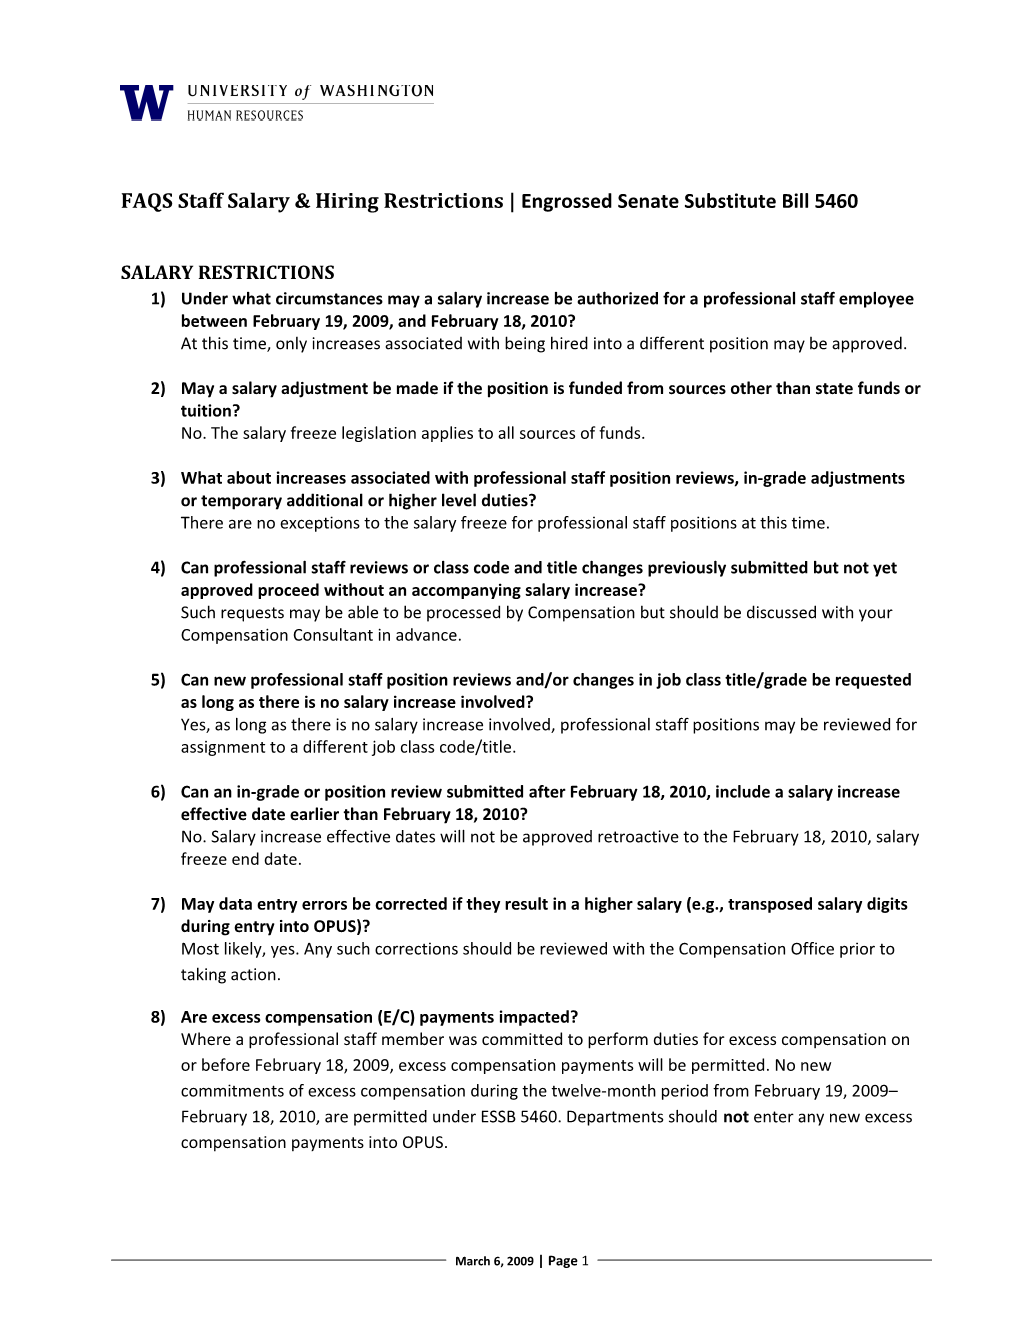 FAQS Staff Salary & Hiring Restrictions Engrossed Senate Substitute Bill 5460